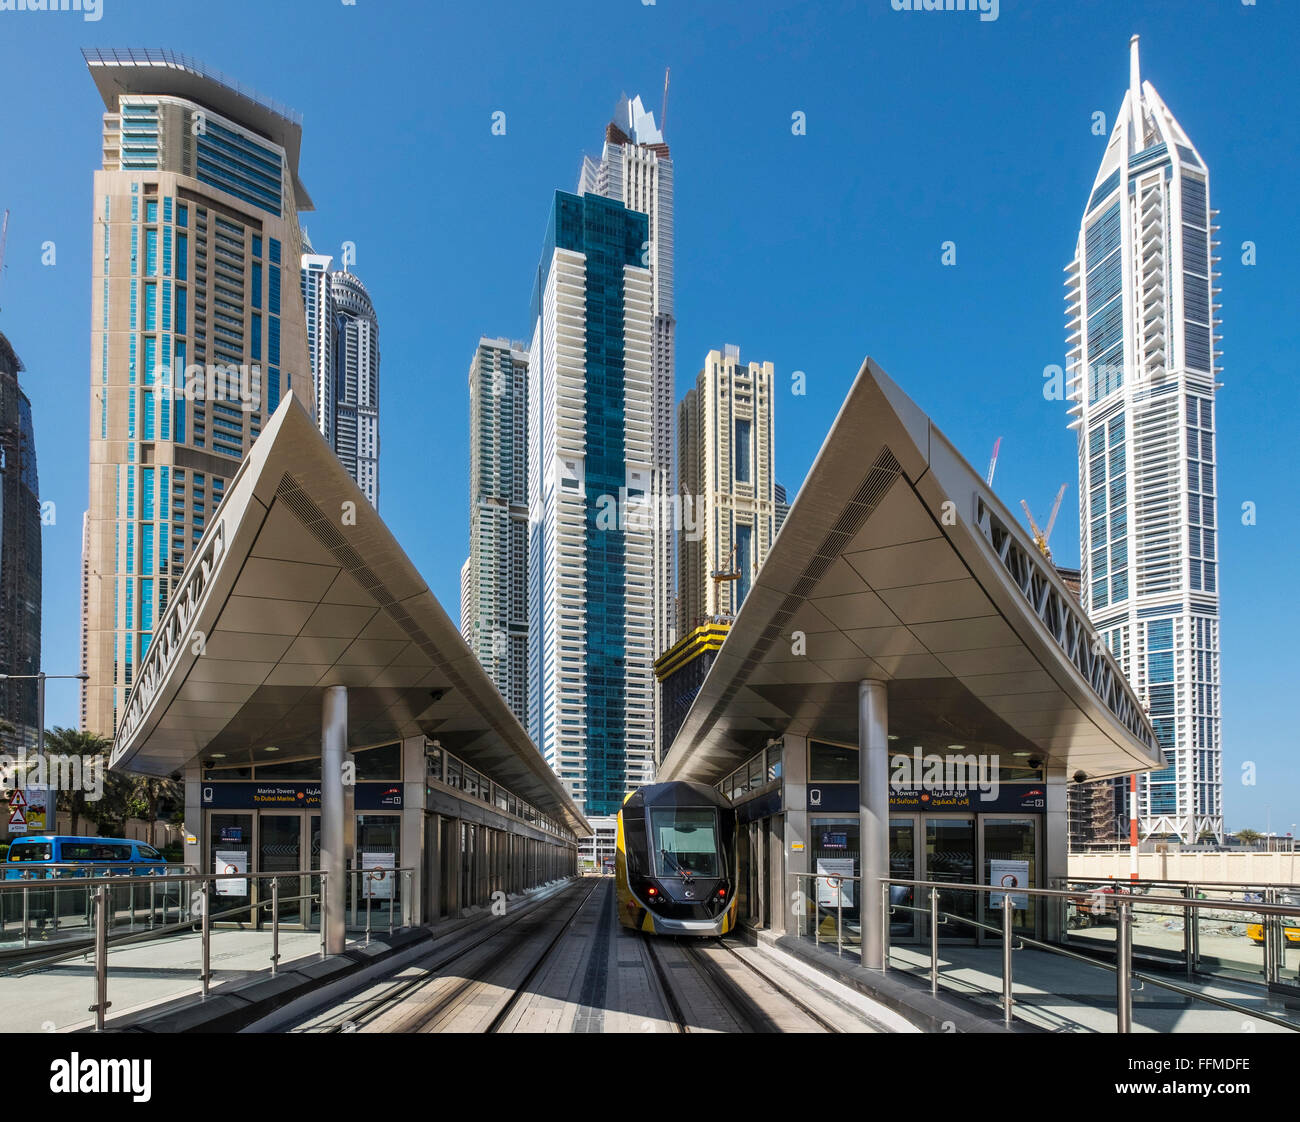 Moderna stazione ferroviaria per Dubai sistema tramviario di Emirati Arabi Uniti Foto Stock